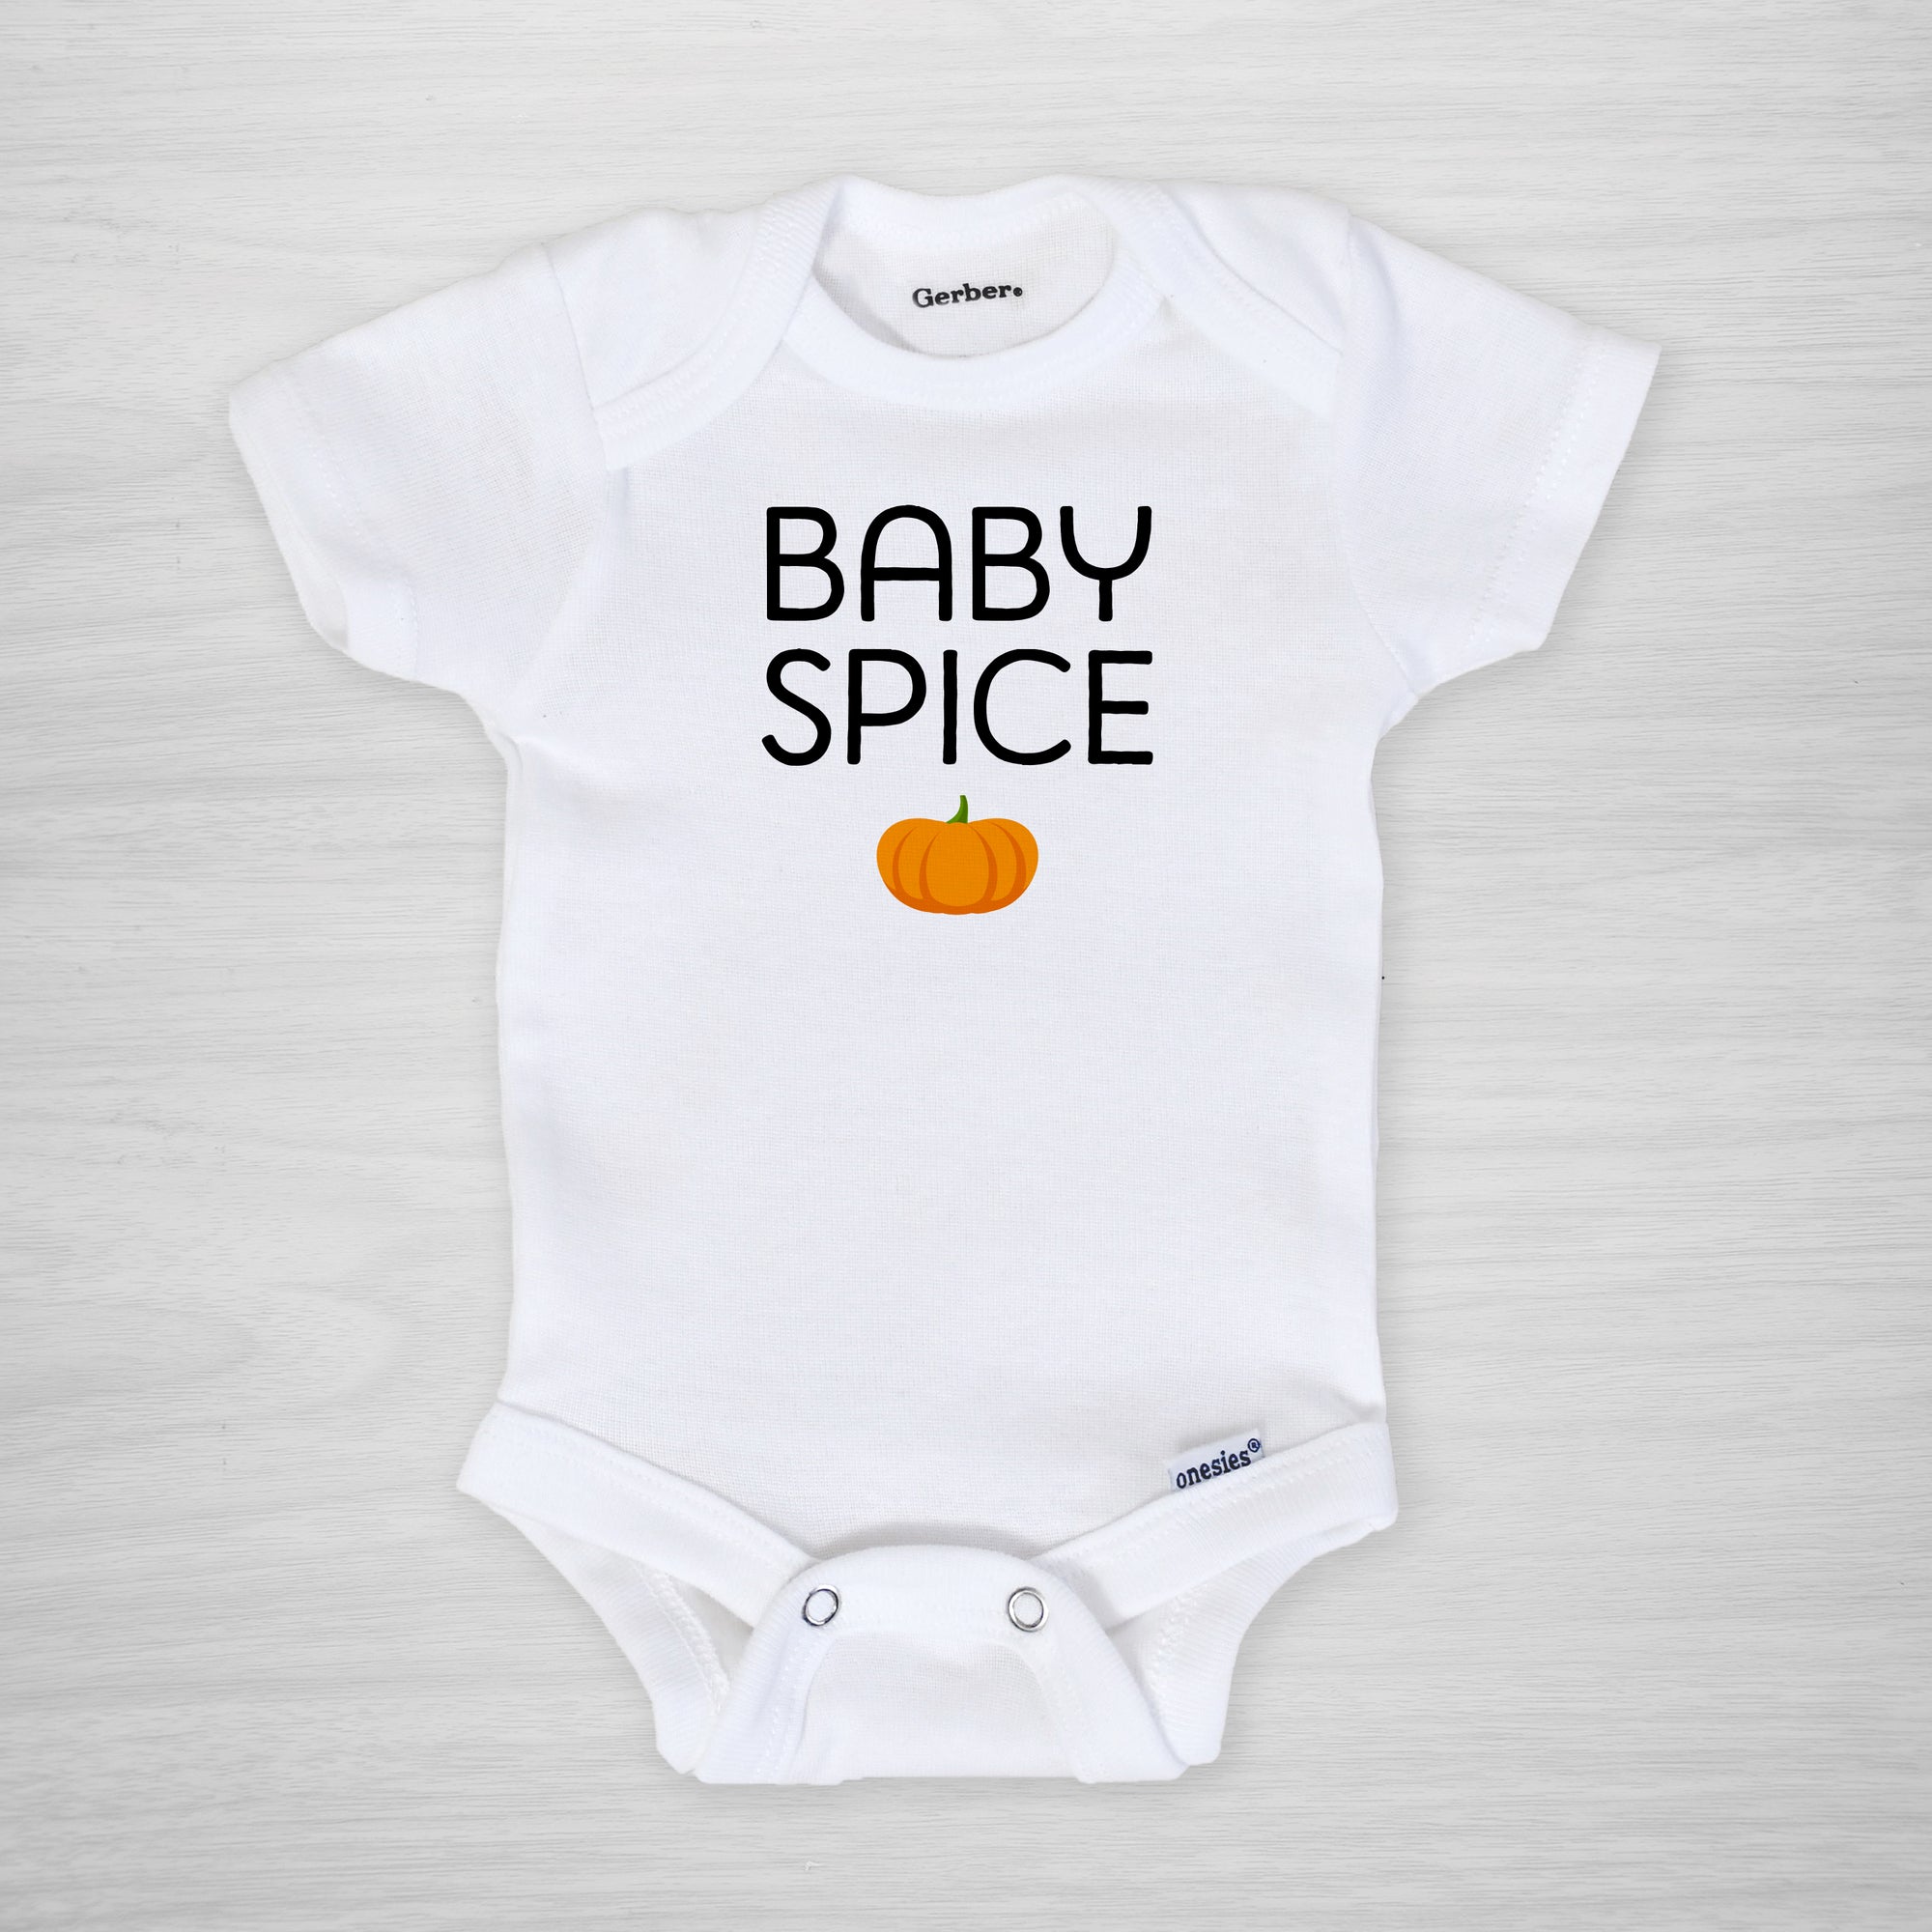 Baby Pumpkin Spice Gerber Onesie®, short sleeved, from Pipsy.com